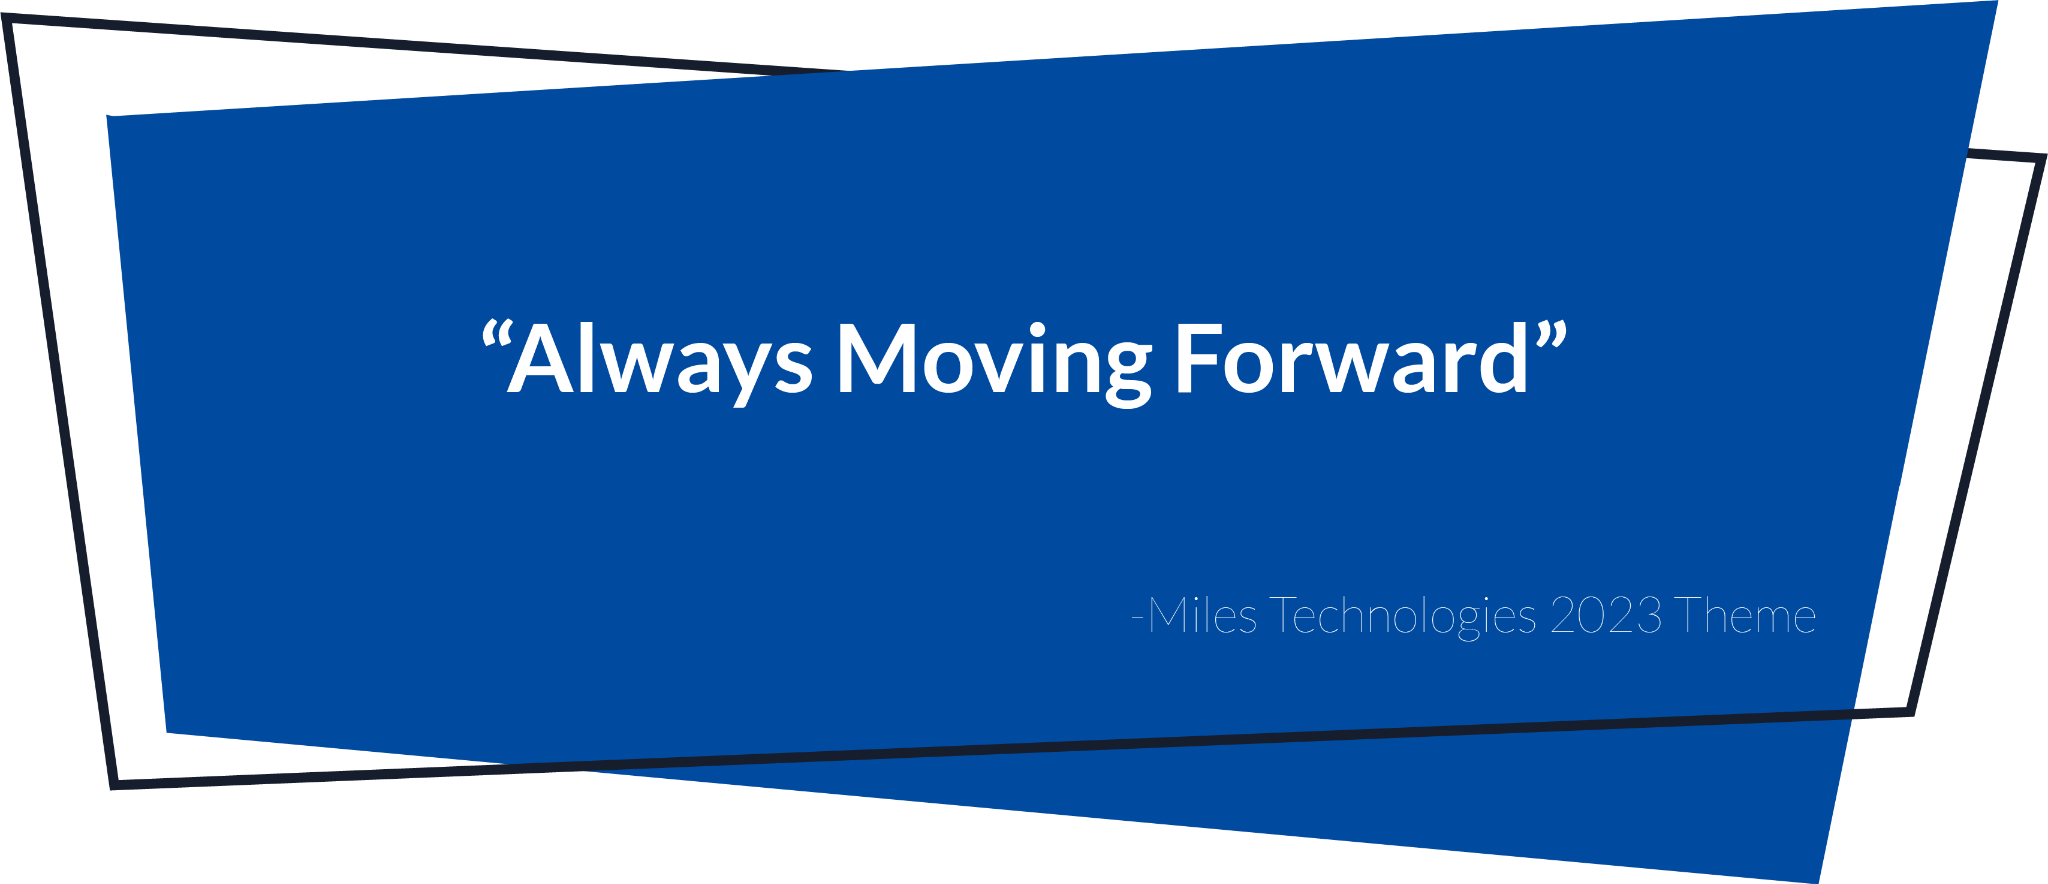 miles-technologies-2023-theme-always-moving-forward